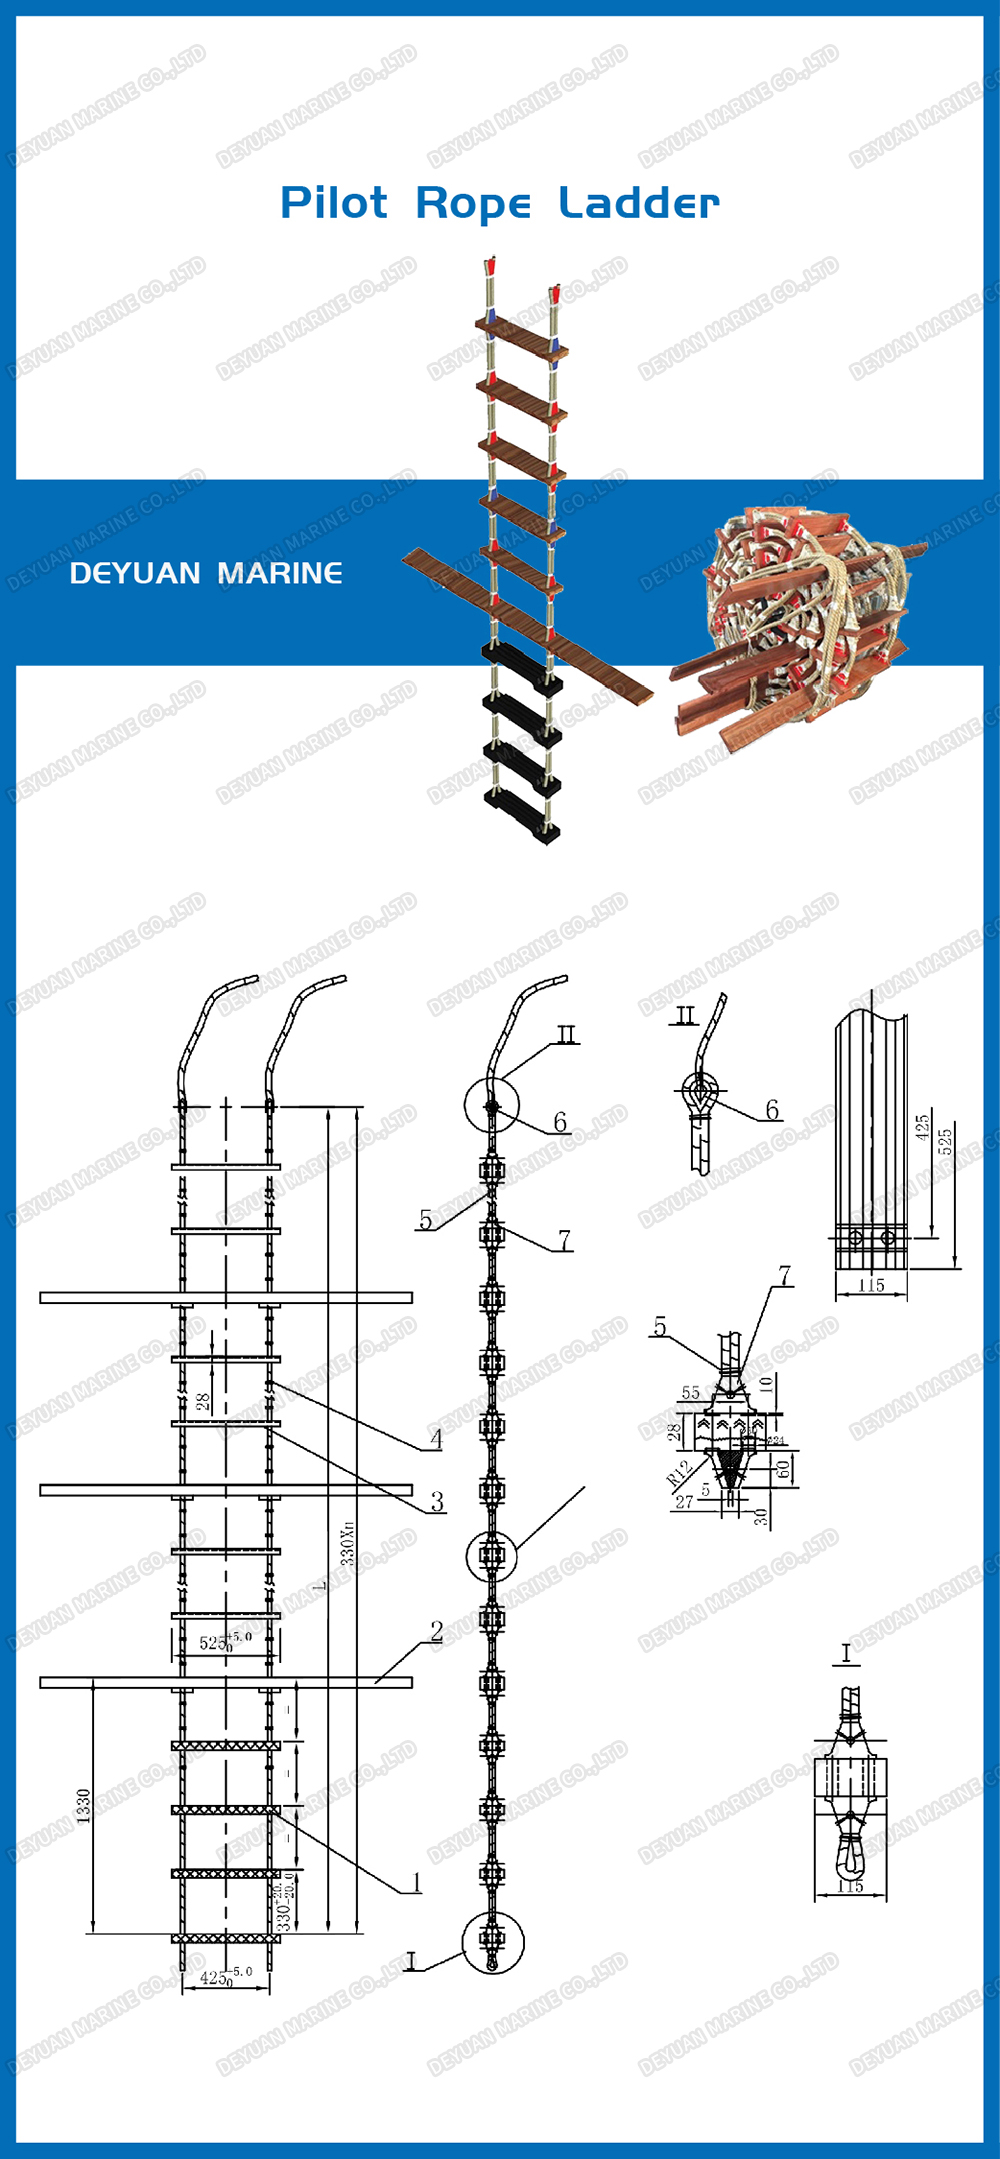 hard wood pilot rope ladder-DEYUAN MARINE